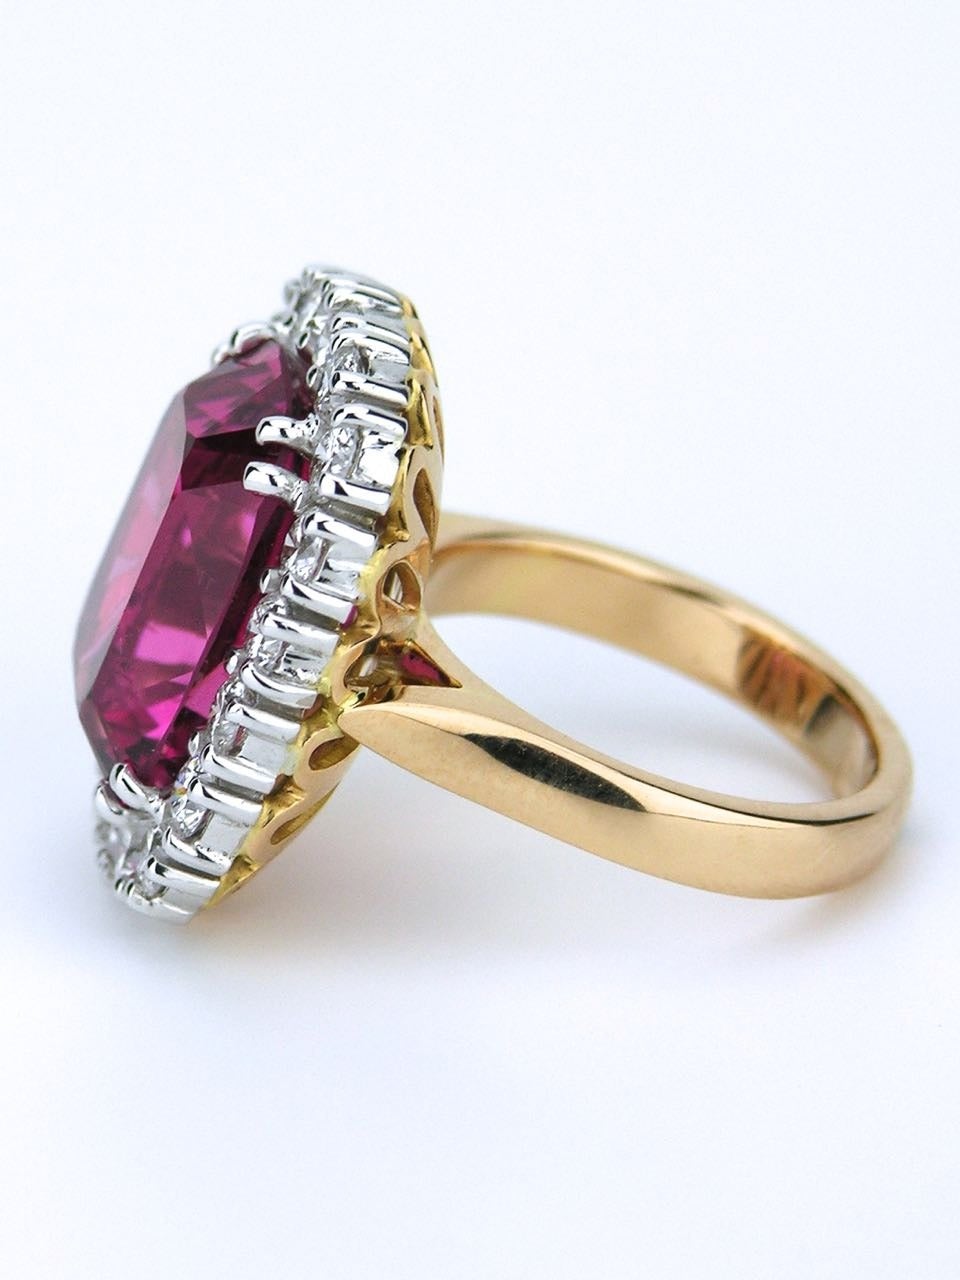 Australian Shocking Pink Cushion Cut Tourmaline Diamond Gold Cluster Ring 1